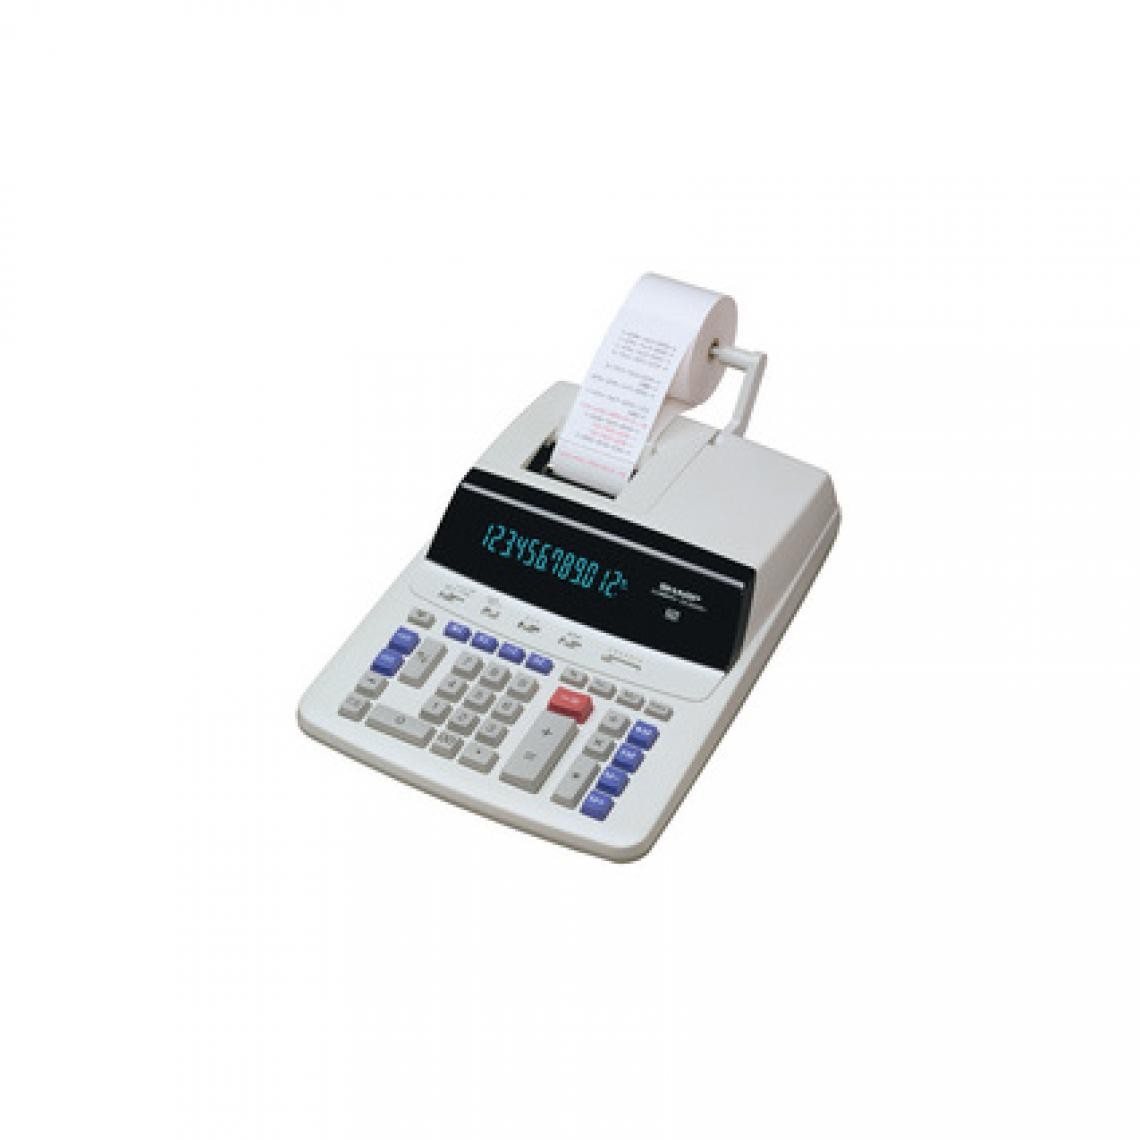 Sharp - SHARP Calculatrice imprimante de bureau CS-2635 RH GY-SE () - Accessoires Bureau